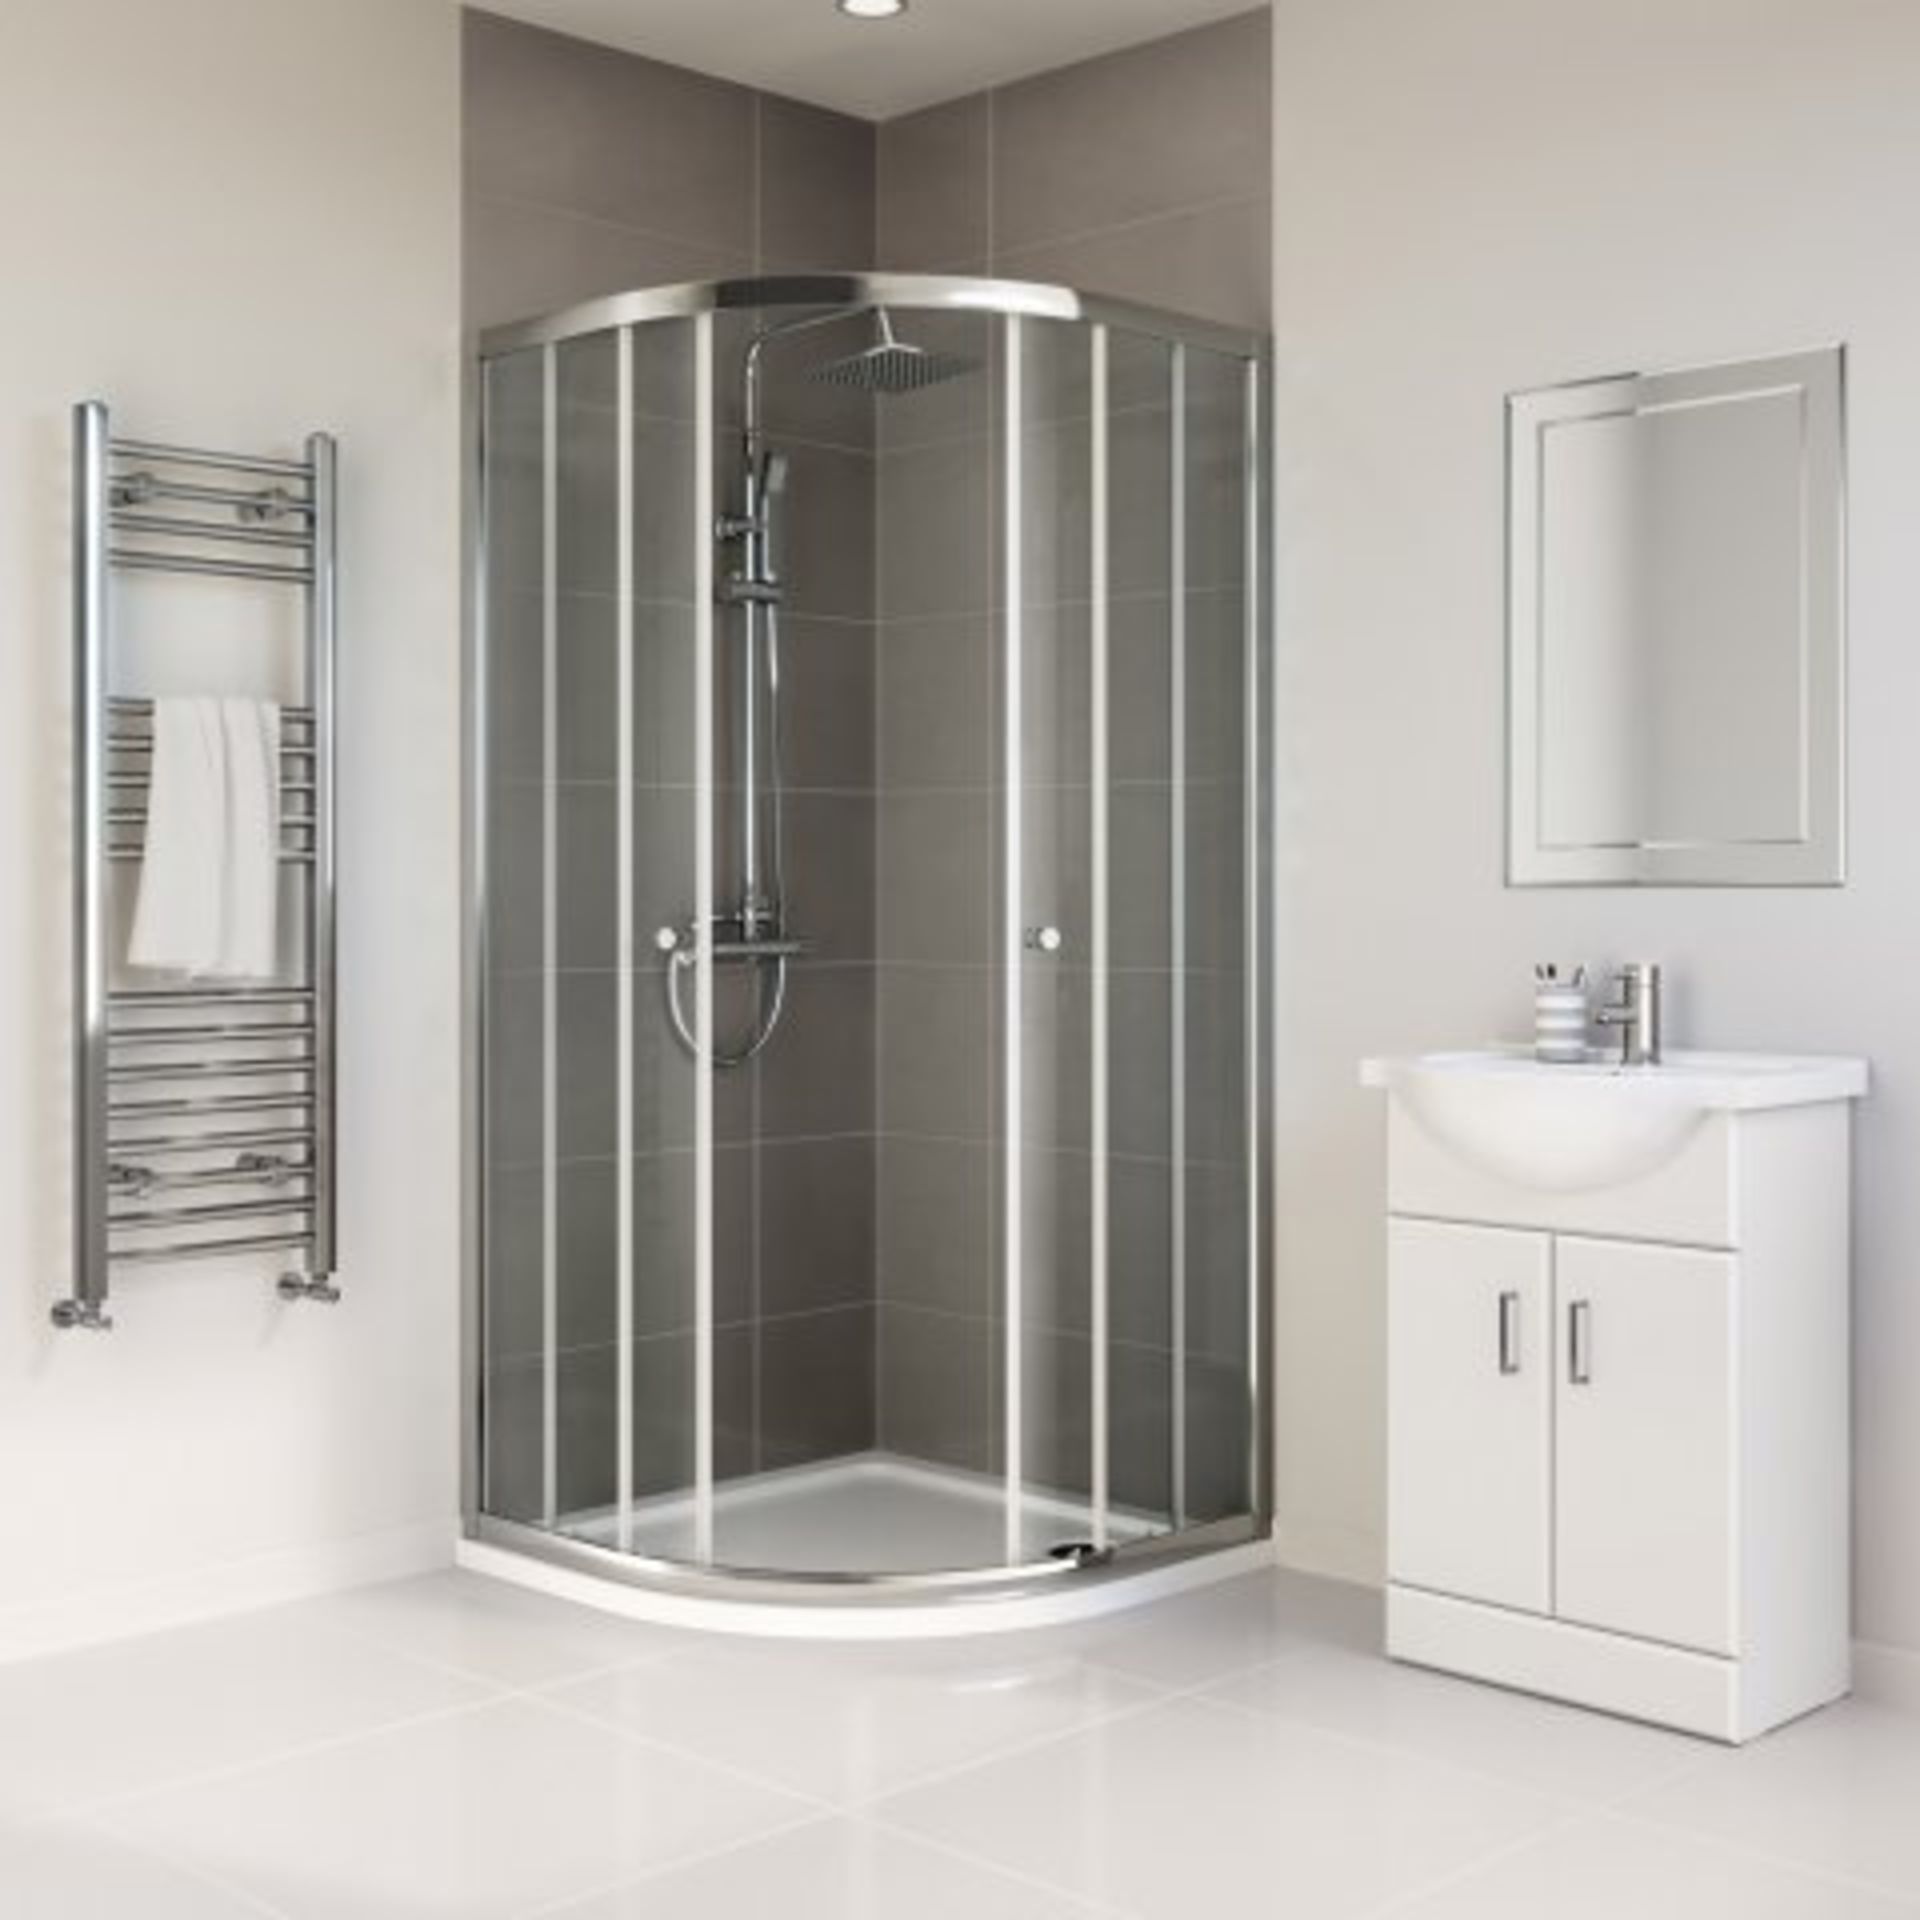 NEW Twyfords 800x800mm - Elements Quadrant Shower Enclosure. RRP £429.99.Shower Enclosures fe... - Image 2 of 3